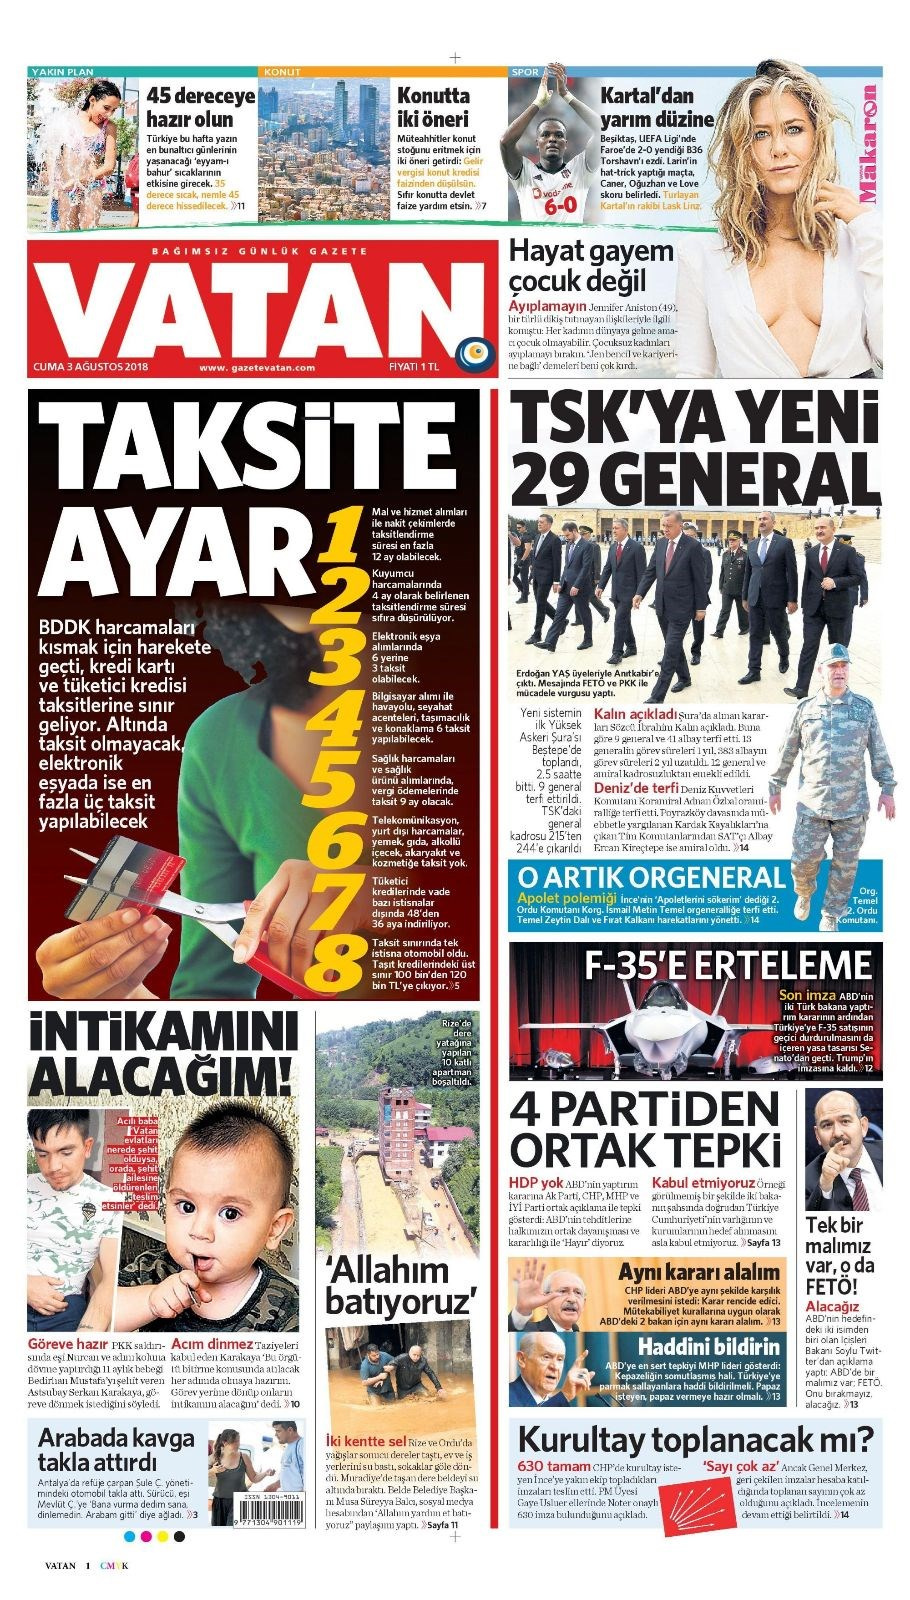 Gazete manşetleri 3 Ağustos 2018 Hürriyet - Posta - Sabah